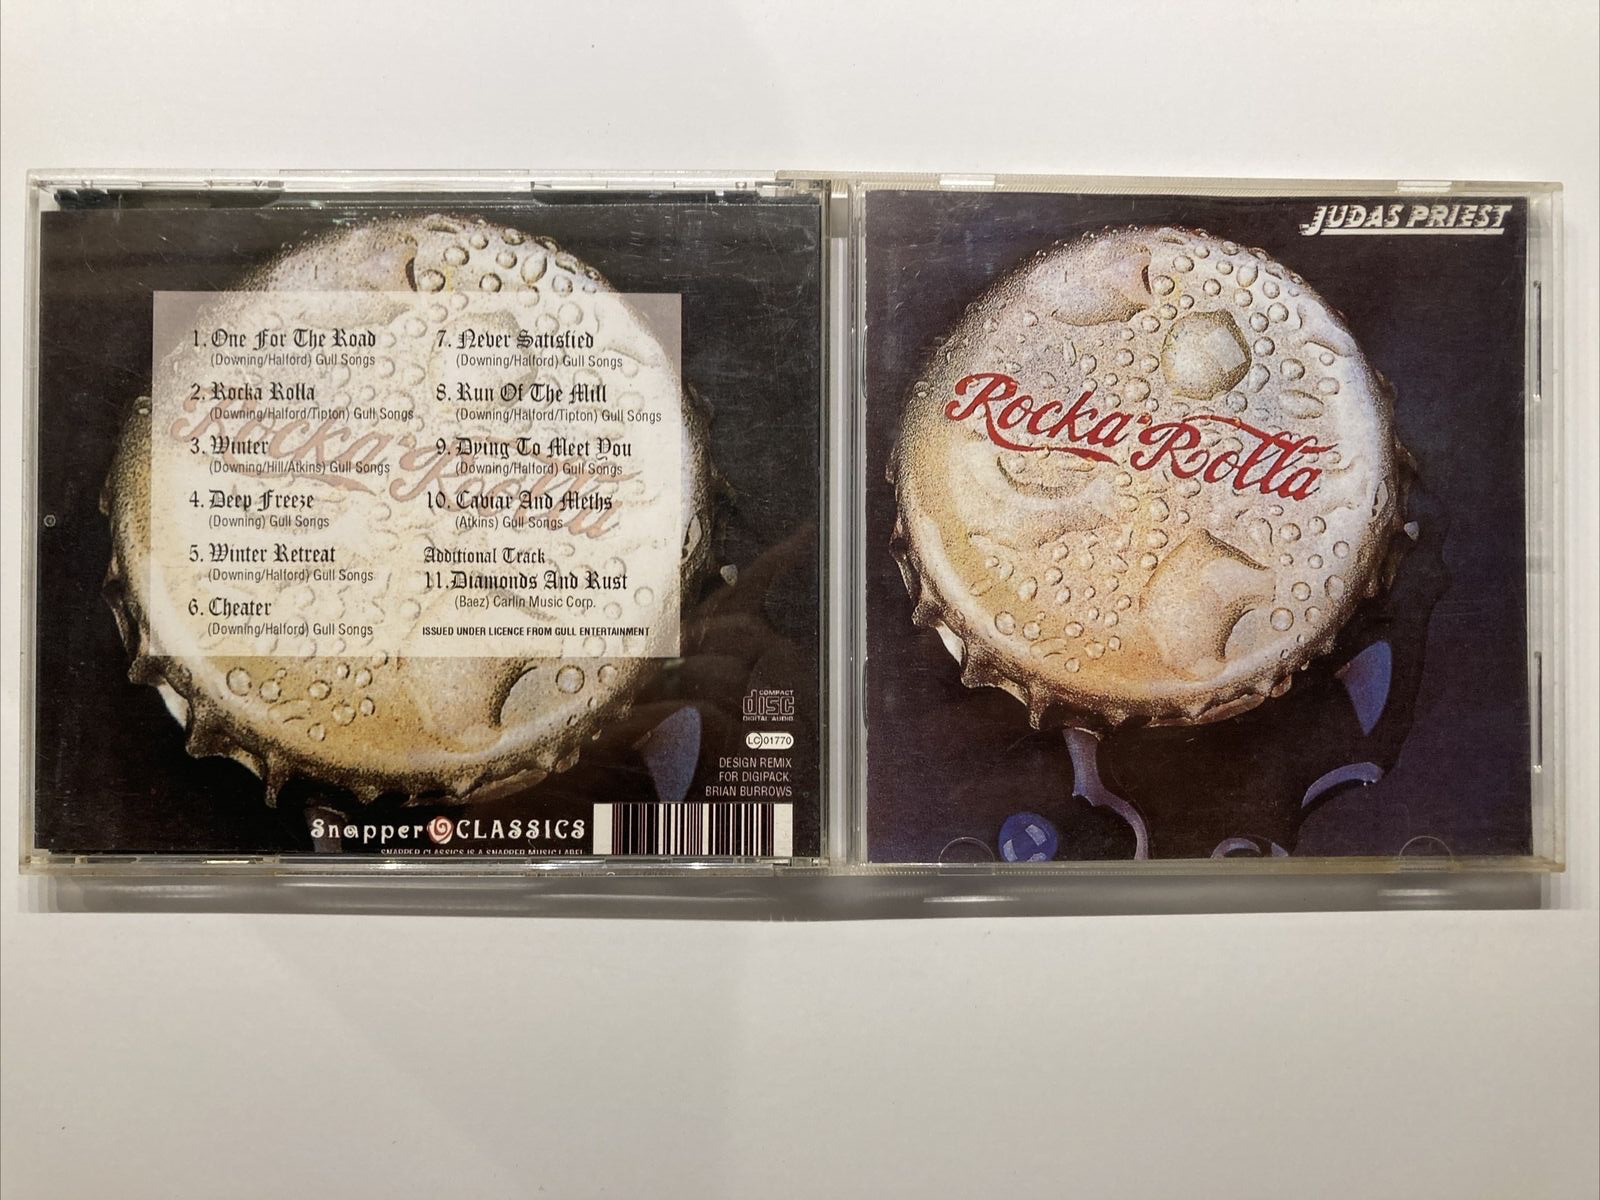 Rocka-Rolla by Judas Priest (CD, 2007) Rare Snapper Classics Release - Import